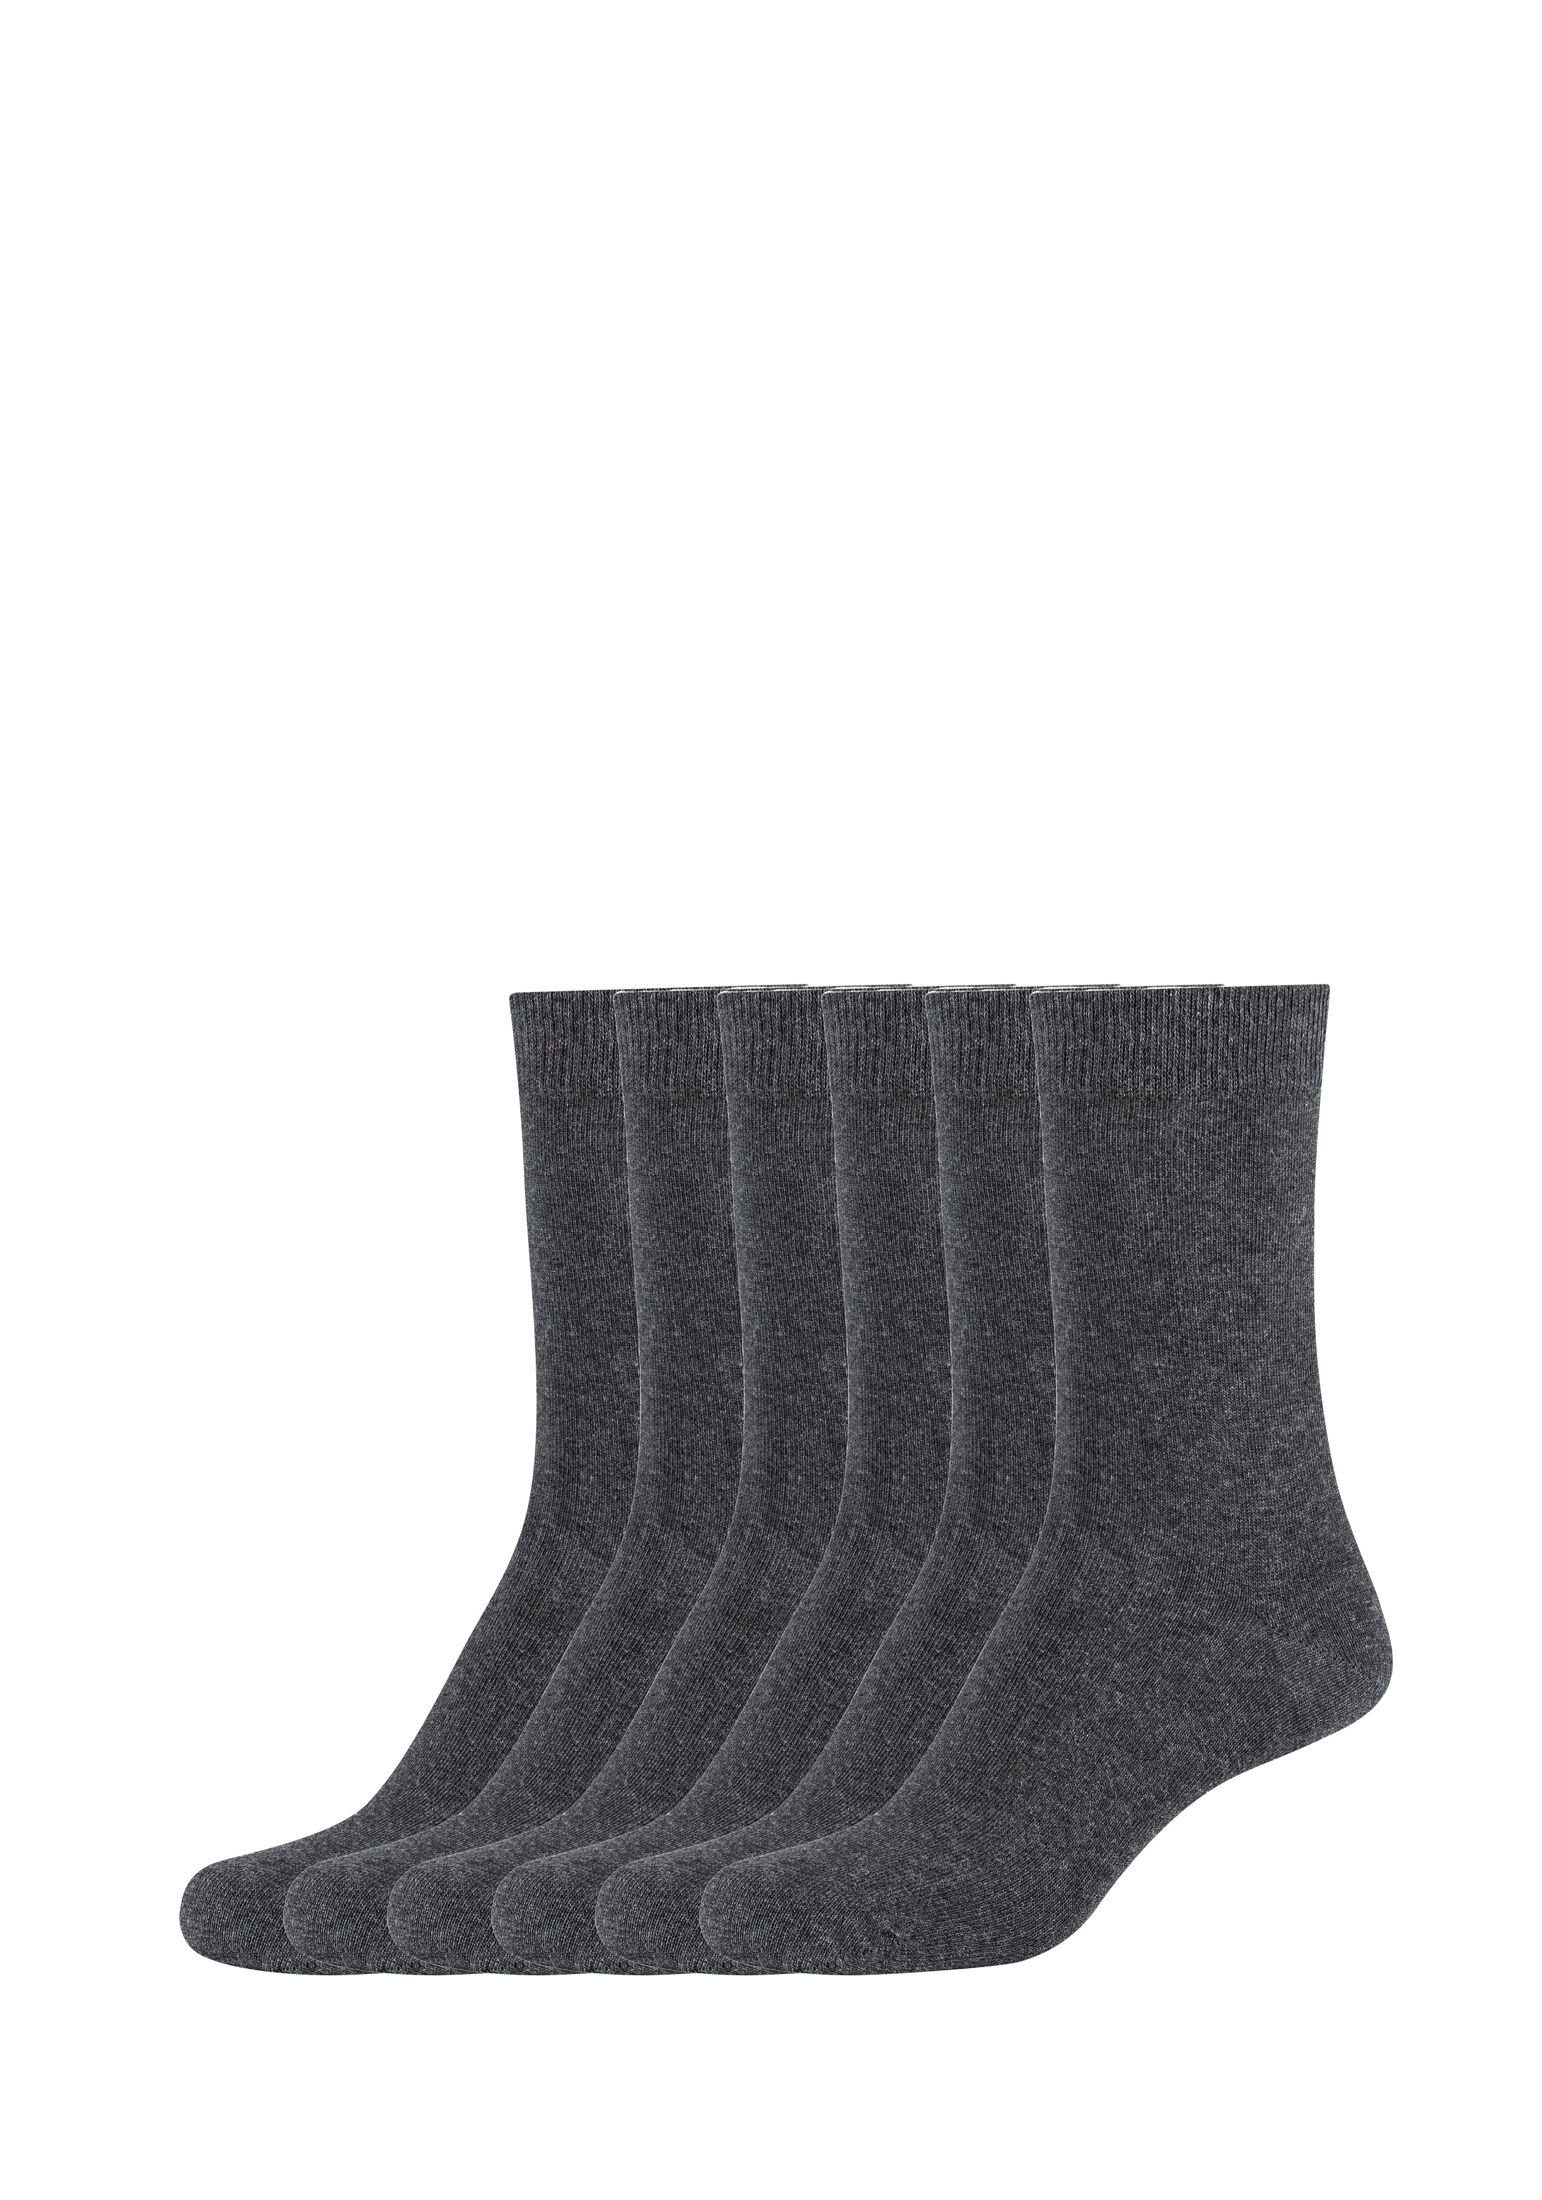 s.Oliver Socken Socken 6er Pack anthracite melange